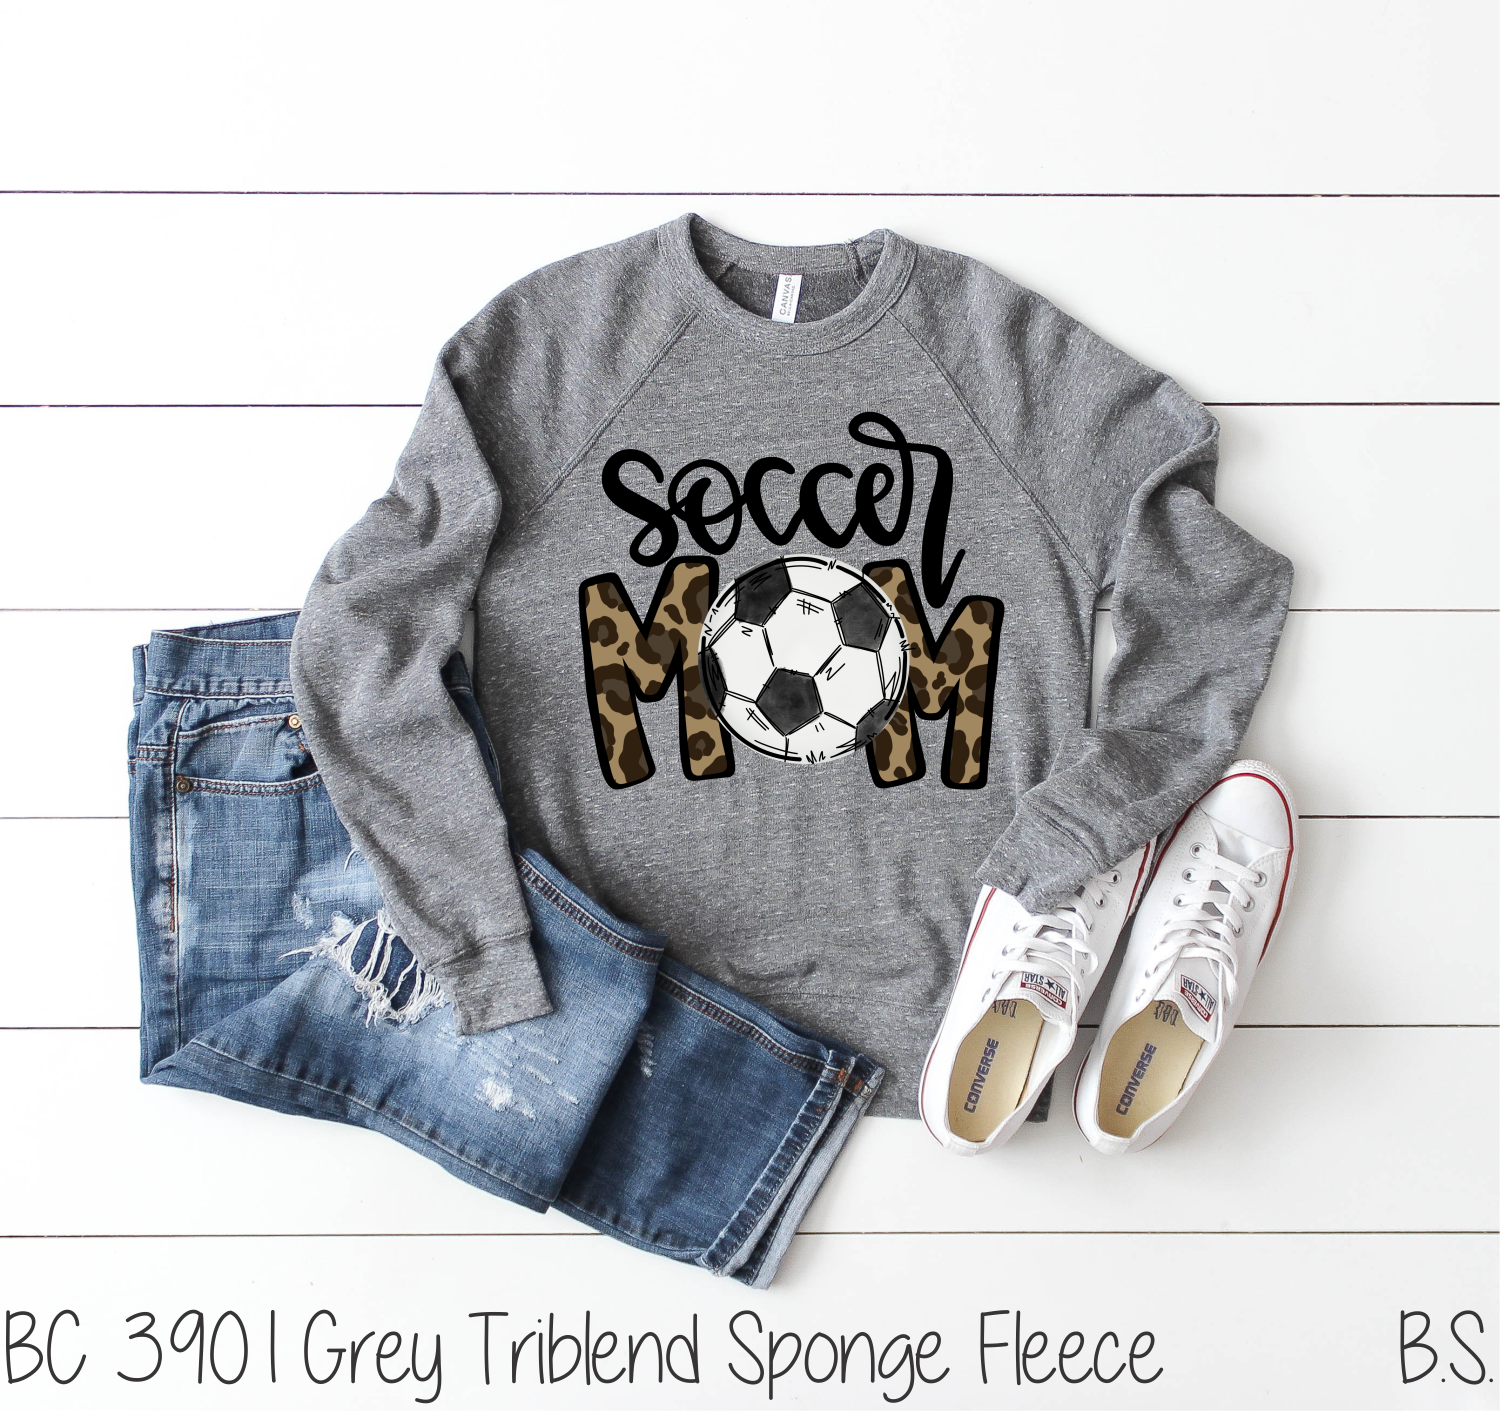 Soccer Mom Galleries